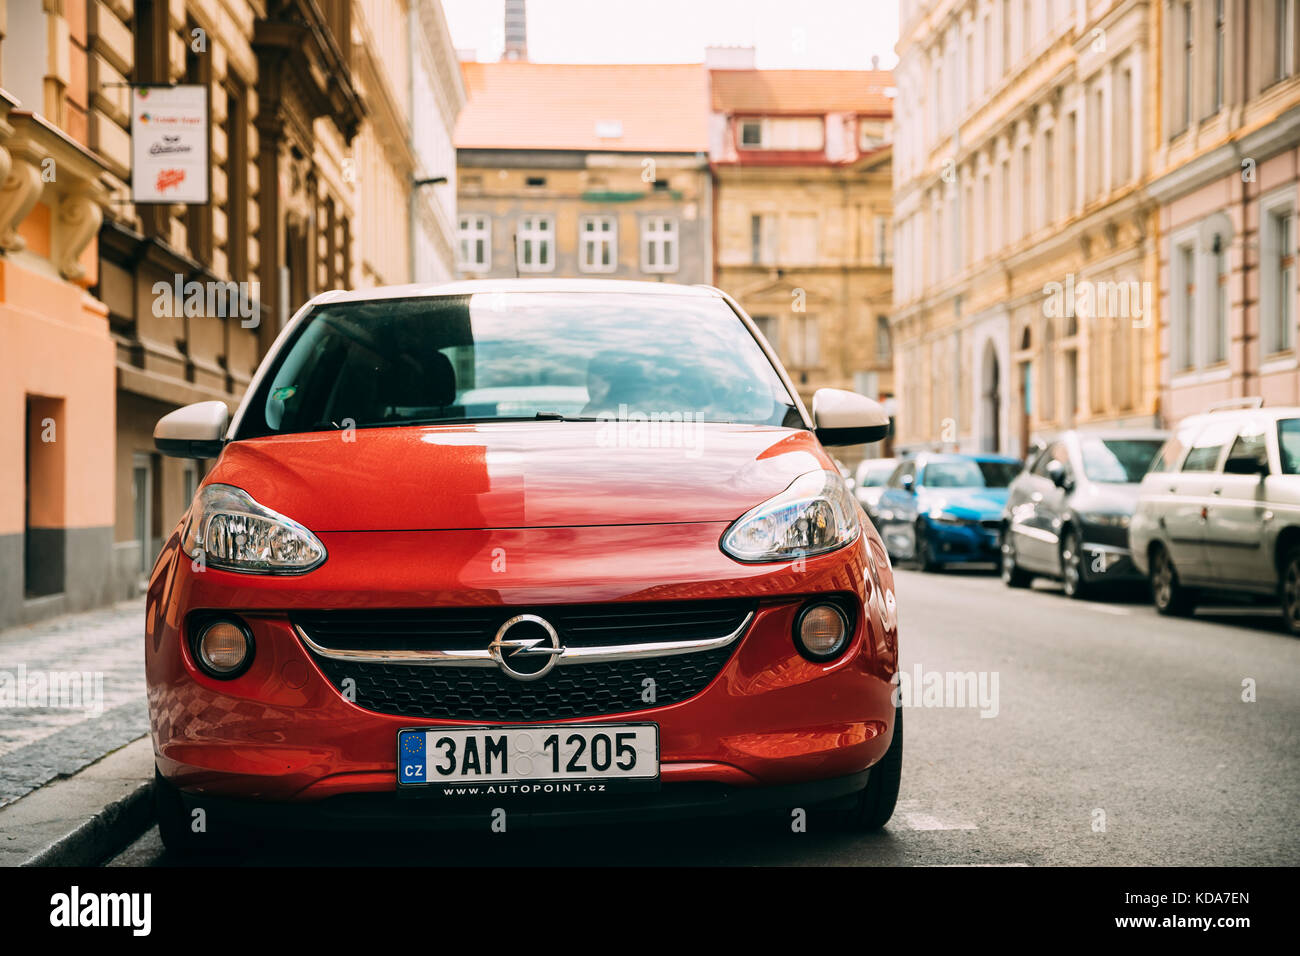 Prague, Czech Republic - September 22, 2017: Red Opel Adam Car Parked In Street Of Residential Area. Opel Adam Is City Car Produced By German Car Manu Stock Photo